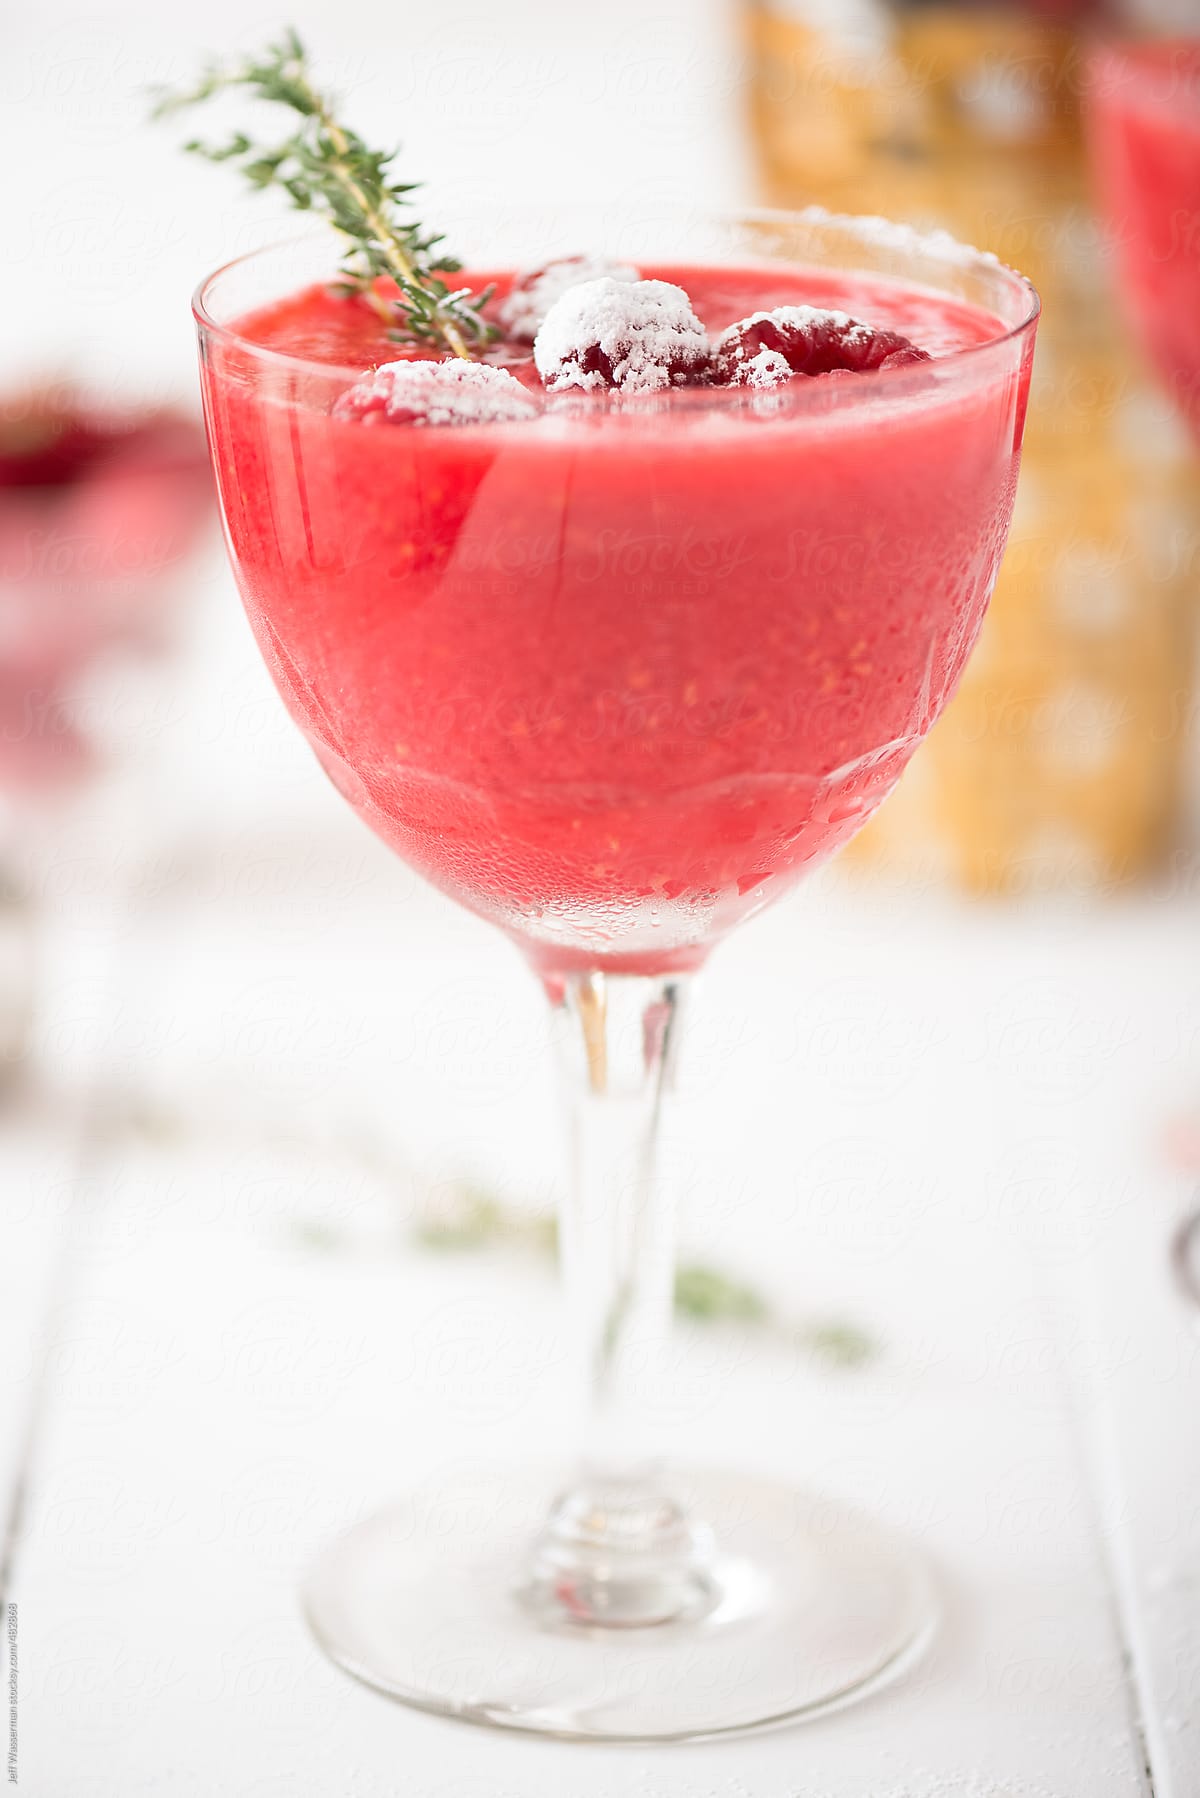 Raspberry Fruit Cocktail with Garnish